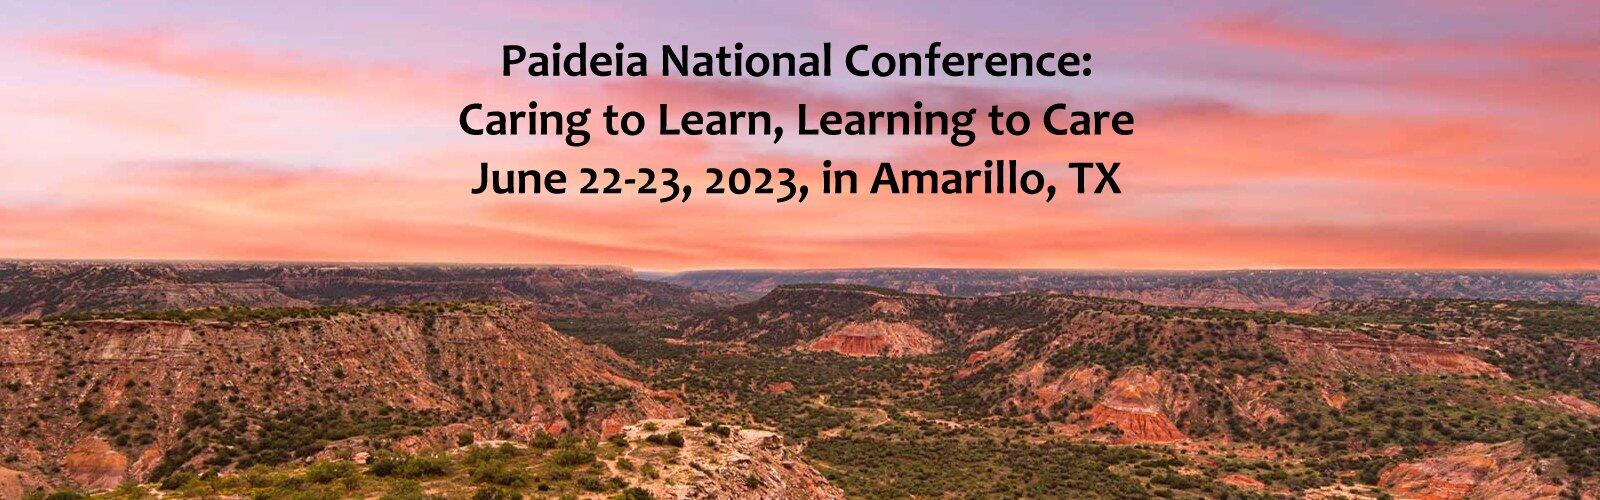 National Conference June 22-23, 2023